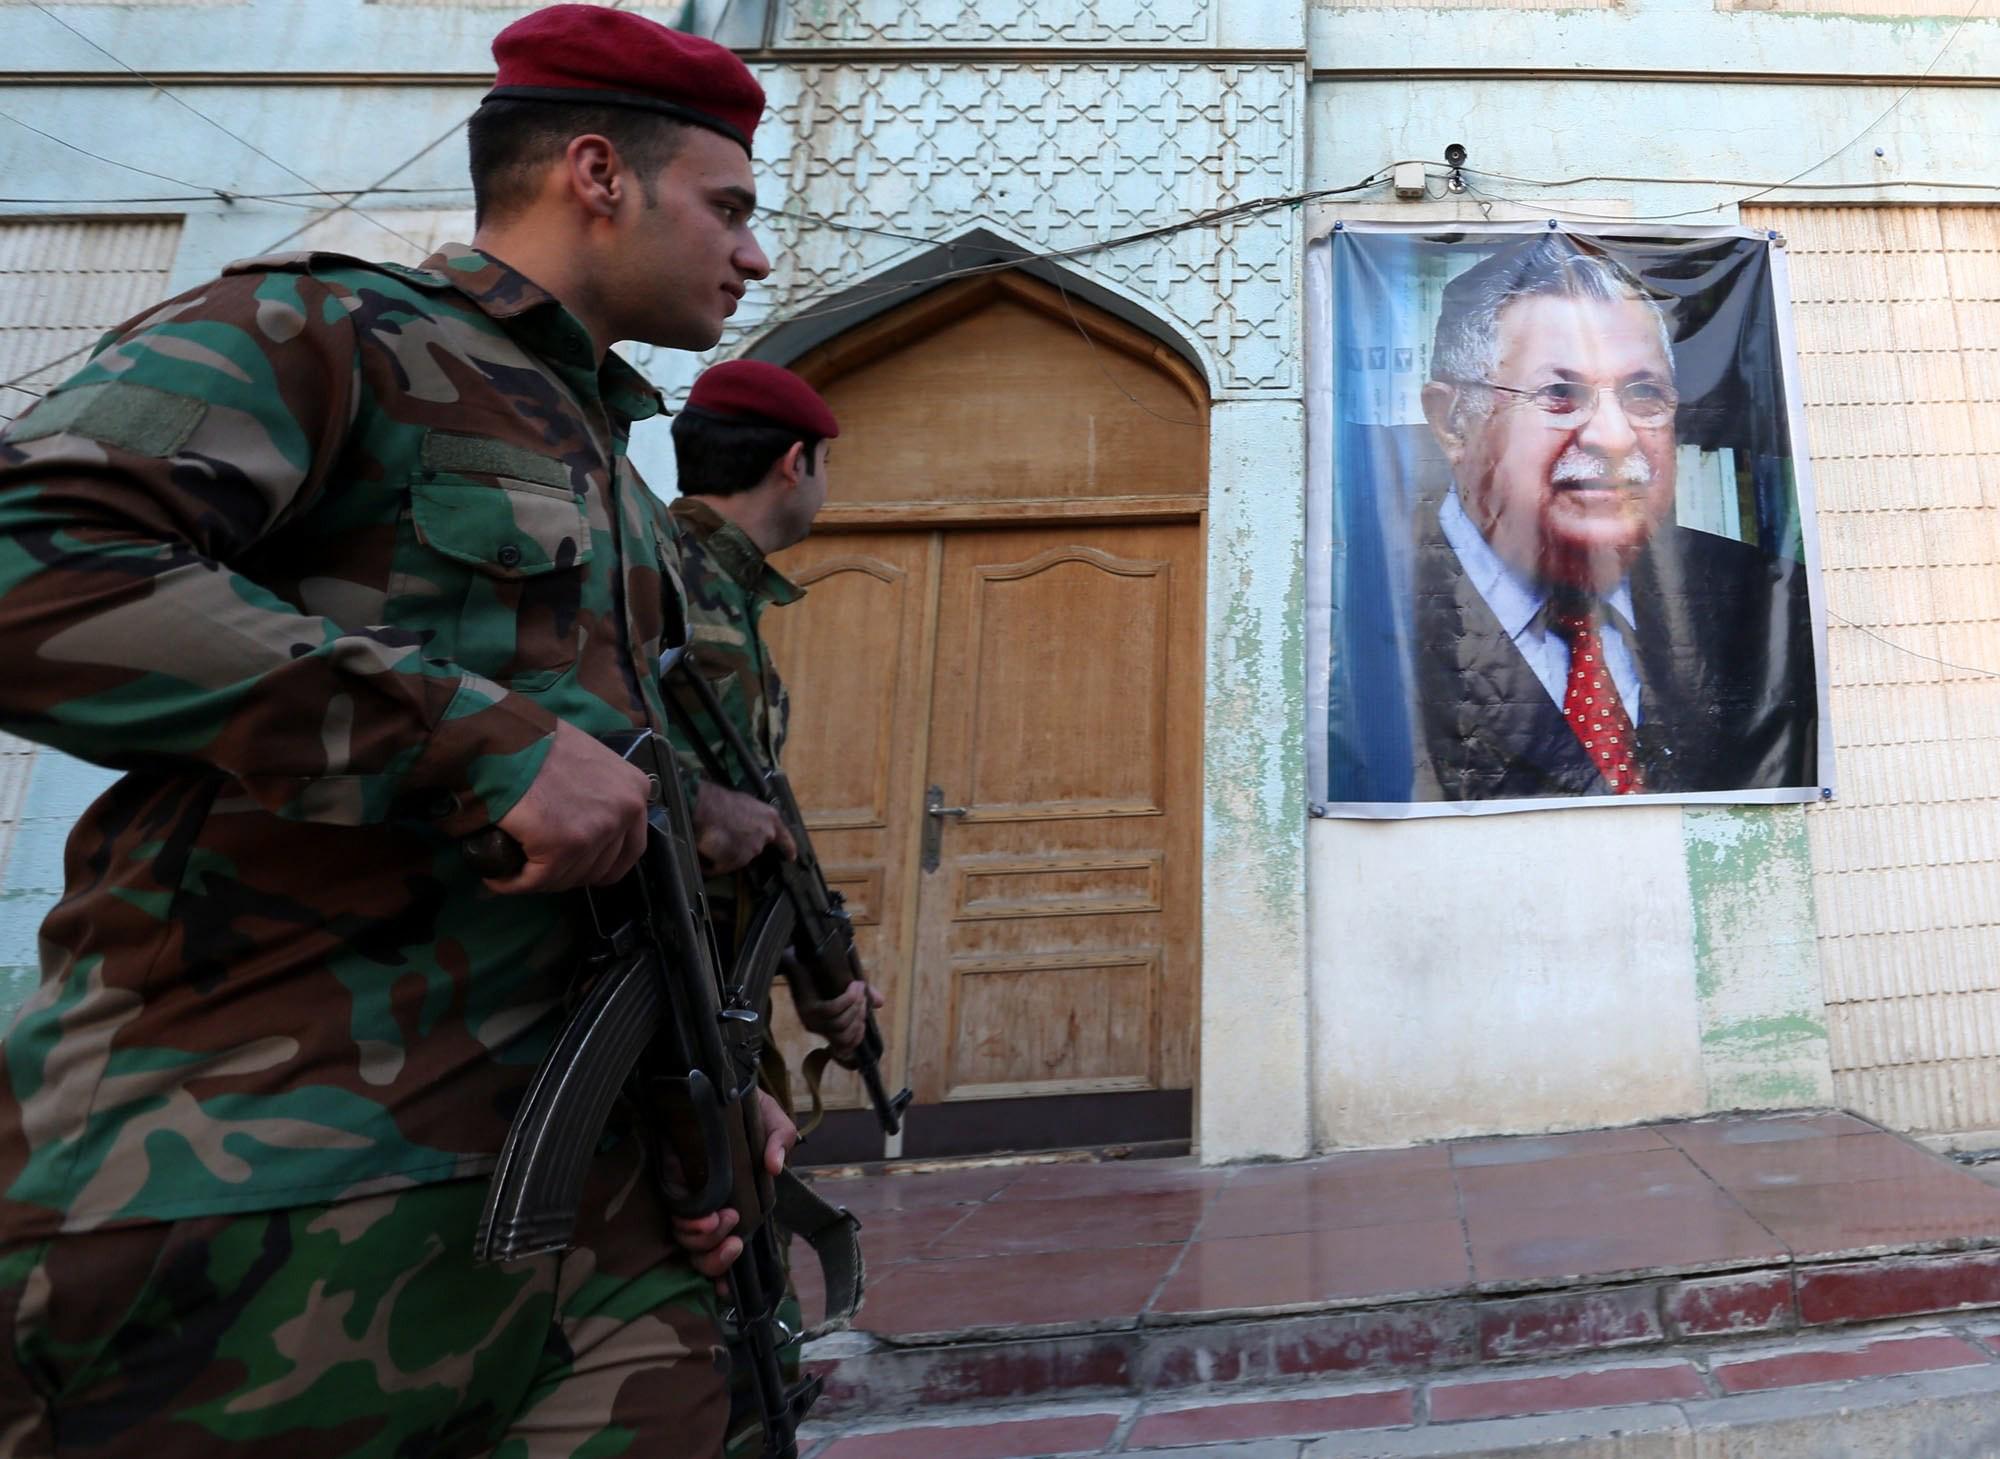 Members of the Iraqi Kurdish Peshmerga forces stand guard near the image of former Iraqi President Jalal al-Talabani